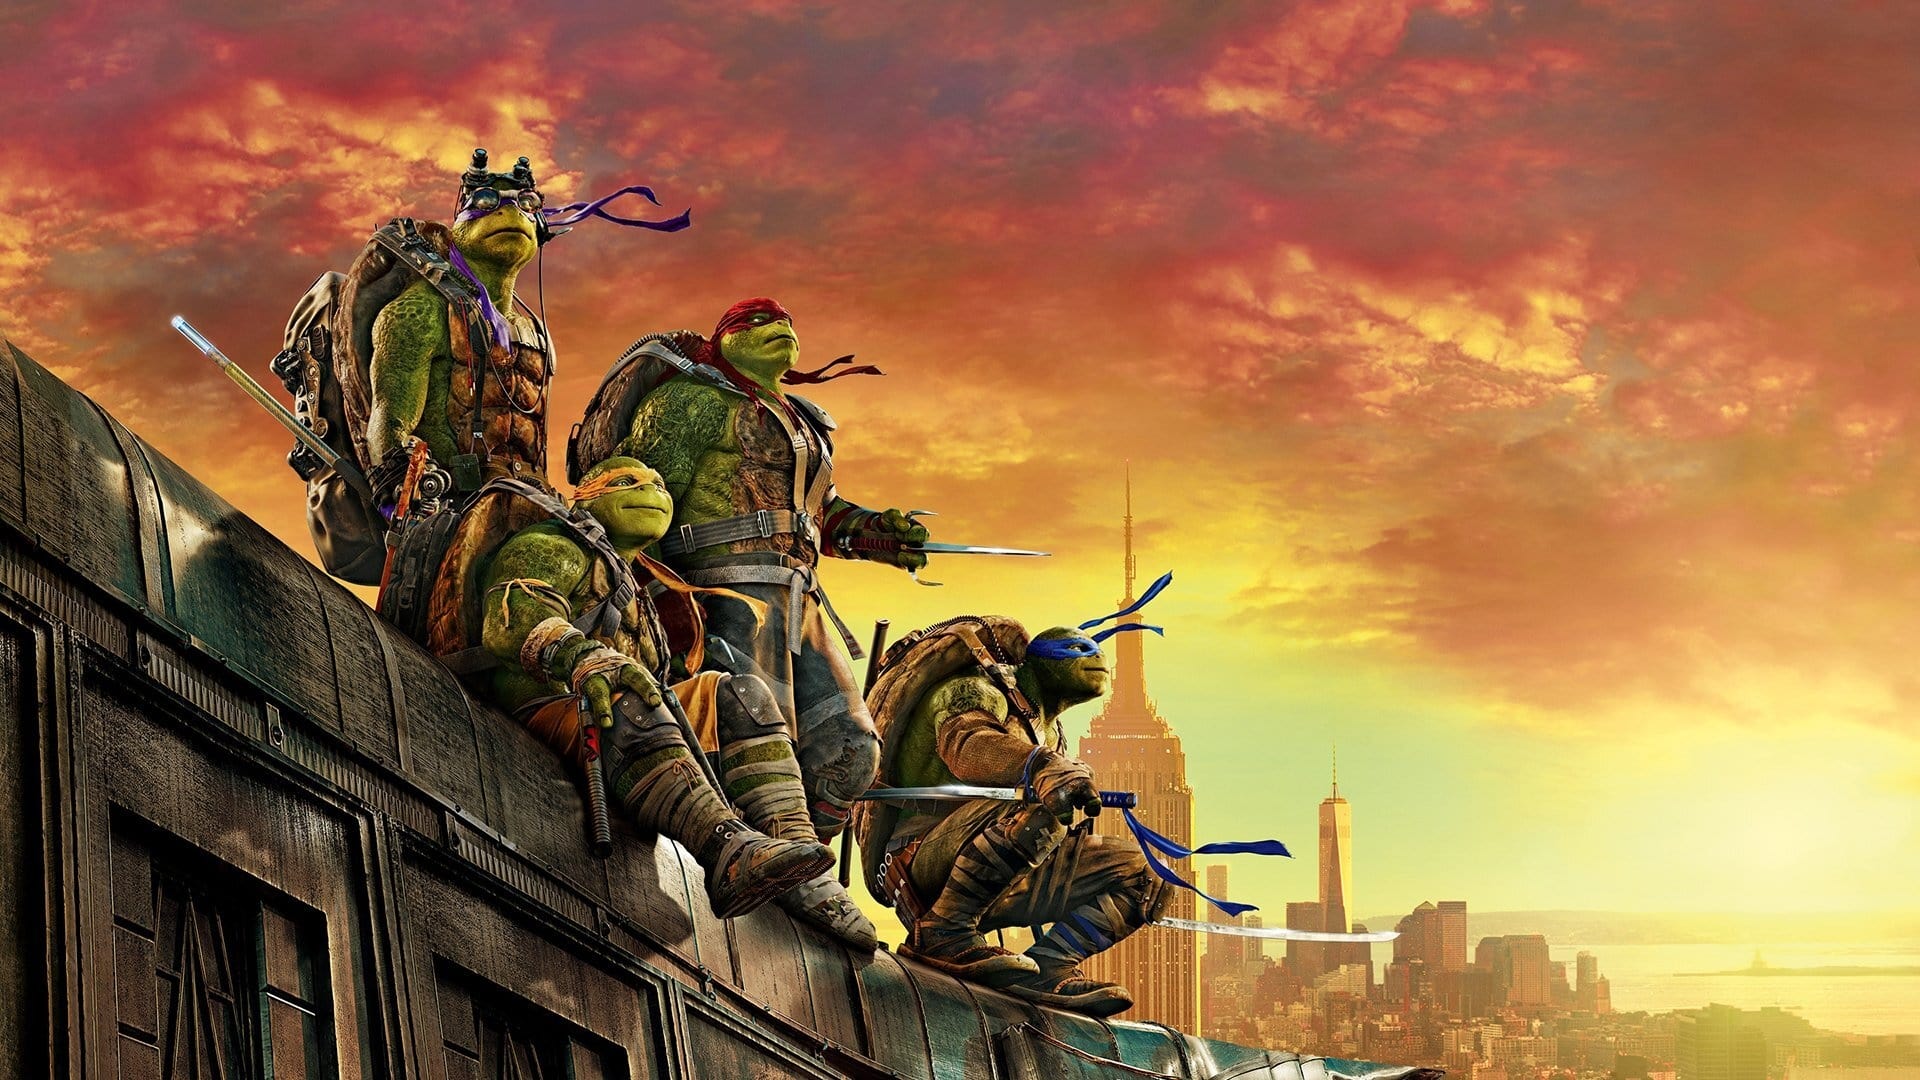 Image du film Ninja Turtles 2 1upnouh55vxkqpxyrz14wx2wijxjpg